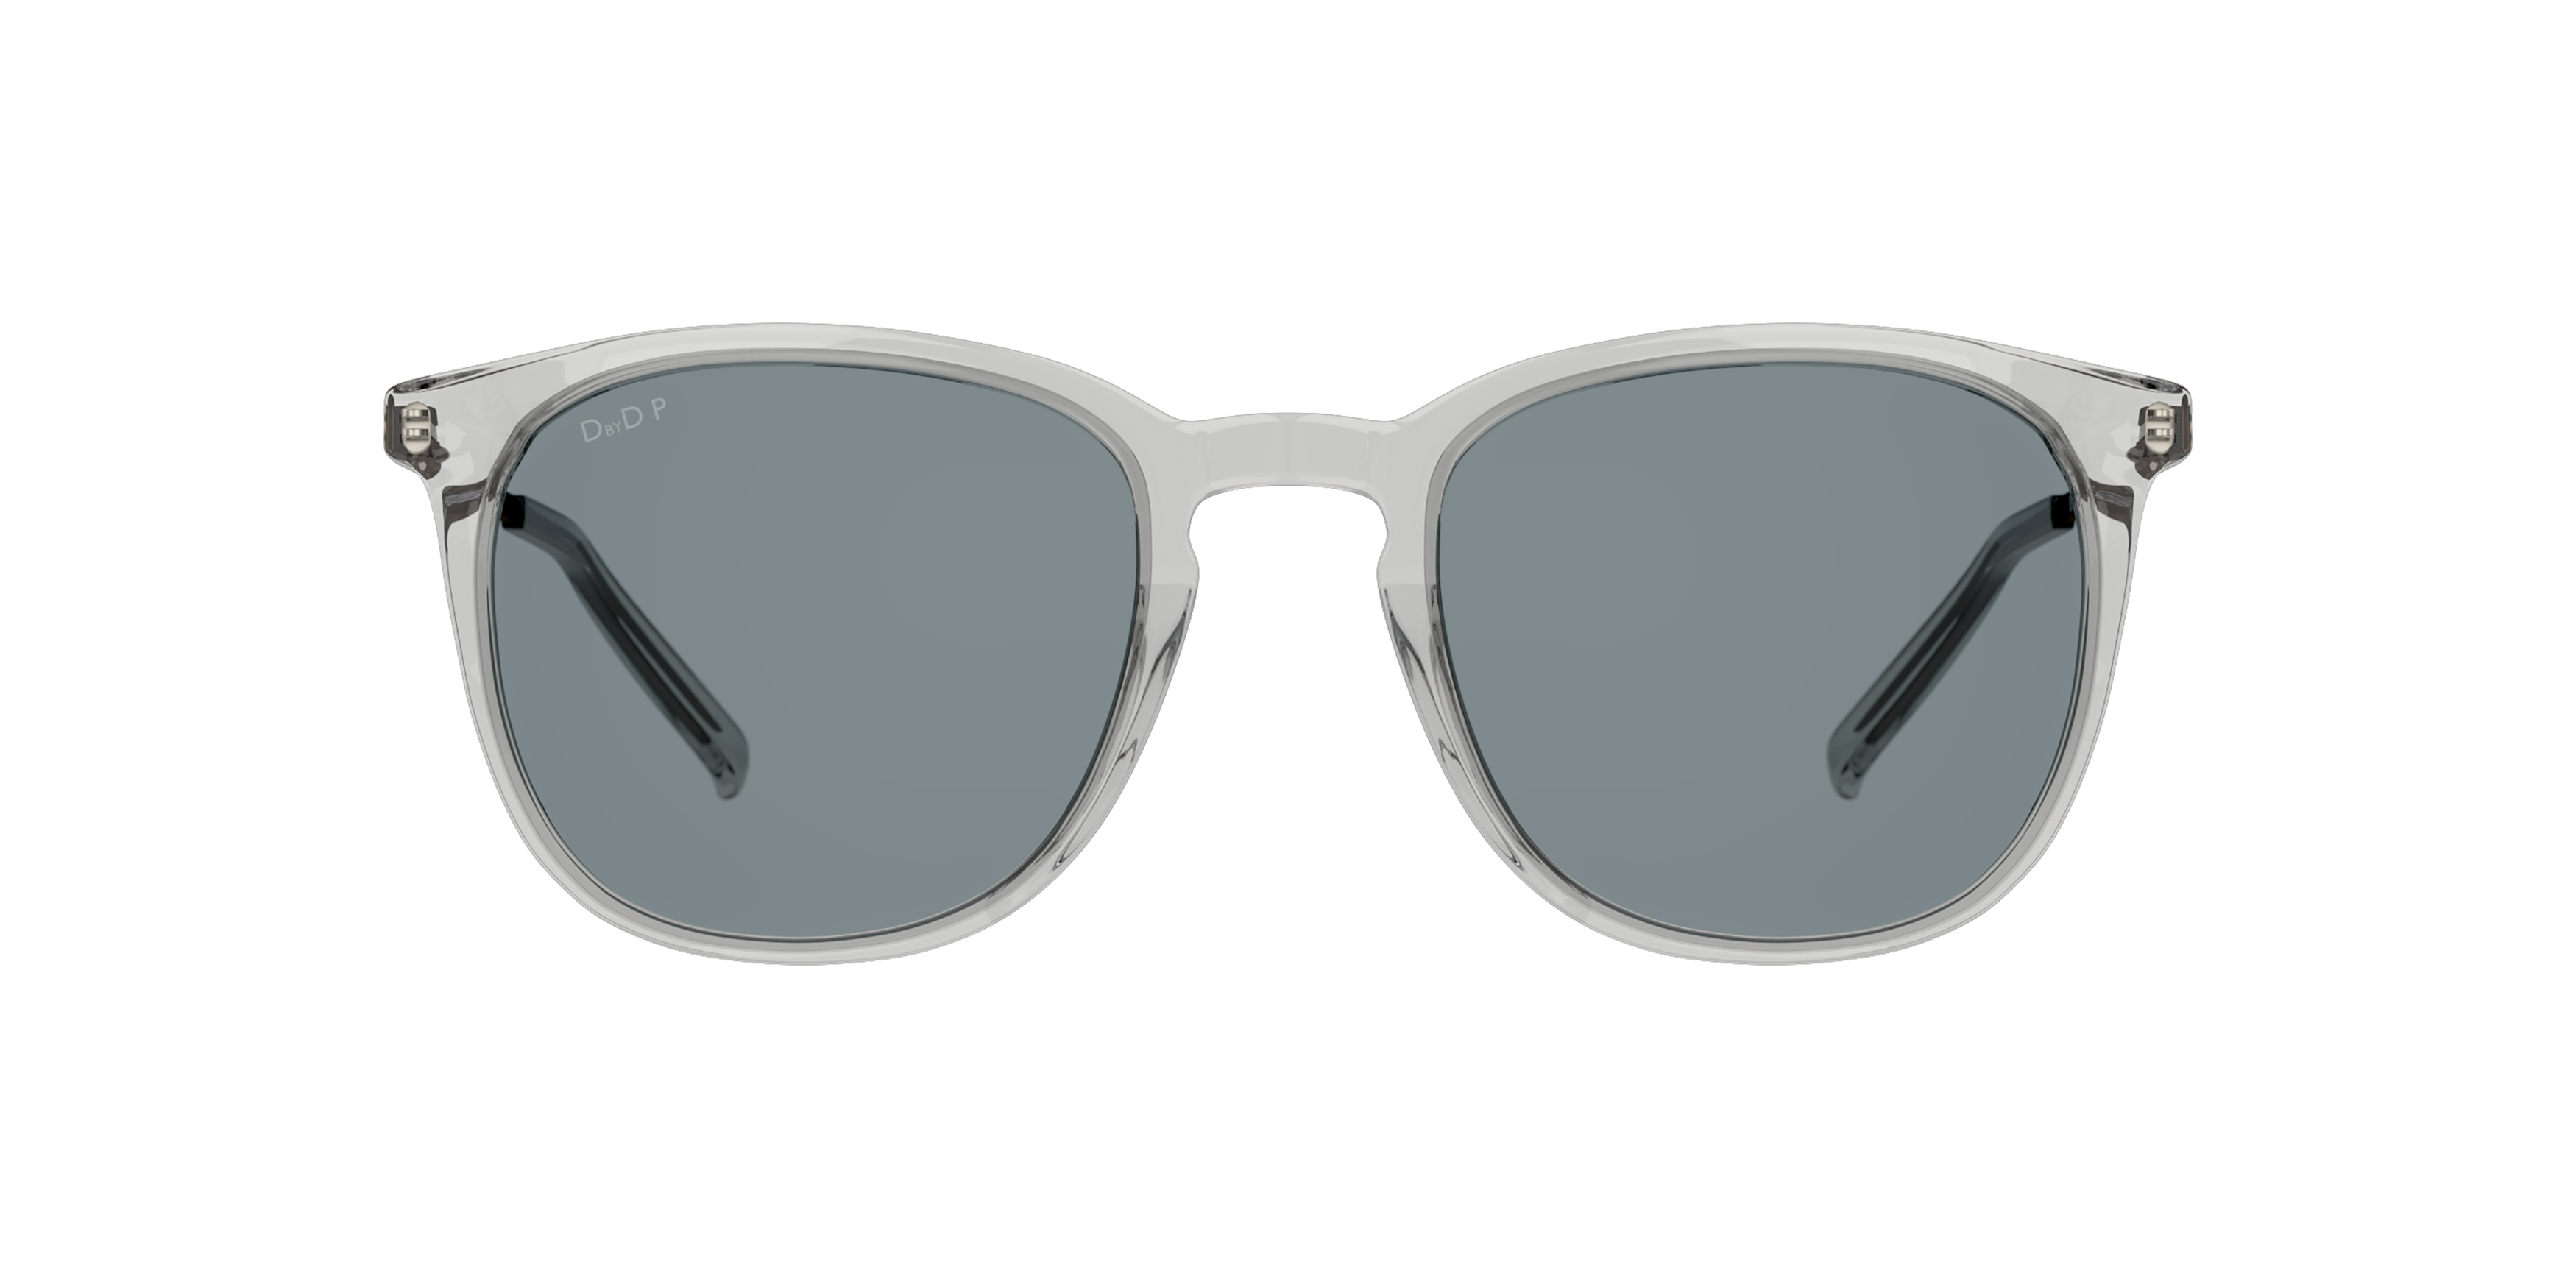 Front DbyD DB SM5006P Sunglasses Grey / Transparent, Grey